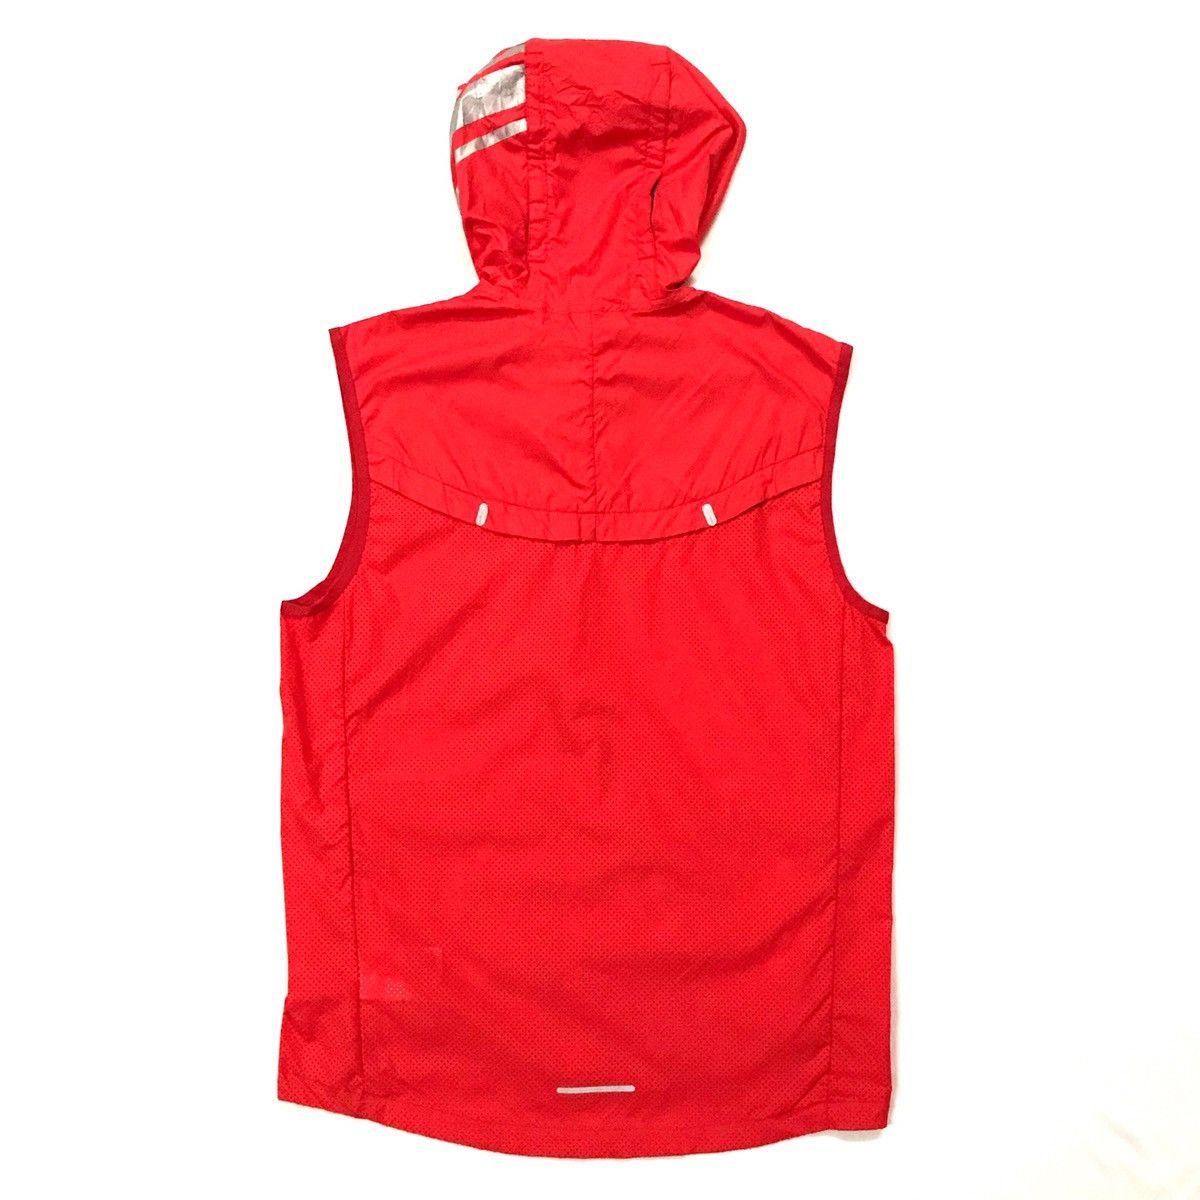 Nike Nike running vest hoodie Size US M / EU 48-50 / 2 - 8 Thumbnail